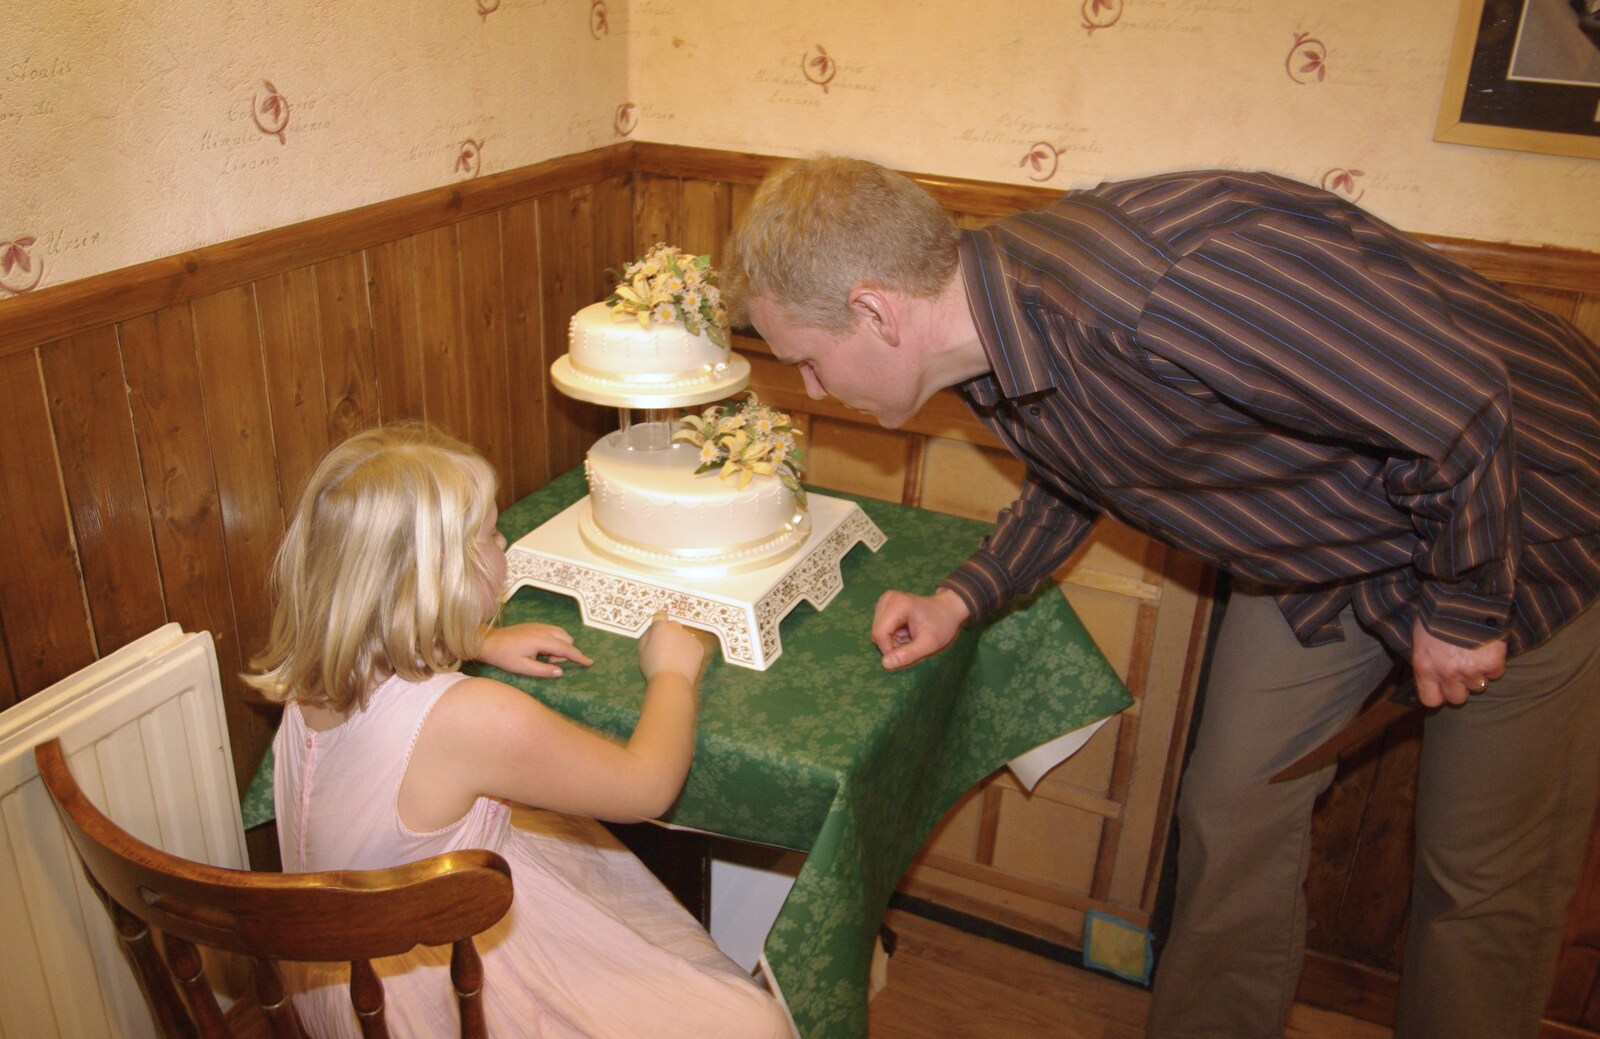 Bill checks out the cake from Bill and Carmen's Post-Wedding Thrash, Yaxley Cherry Tree, Suffolk - 8th November 2008